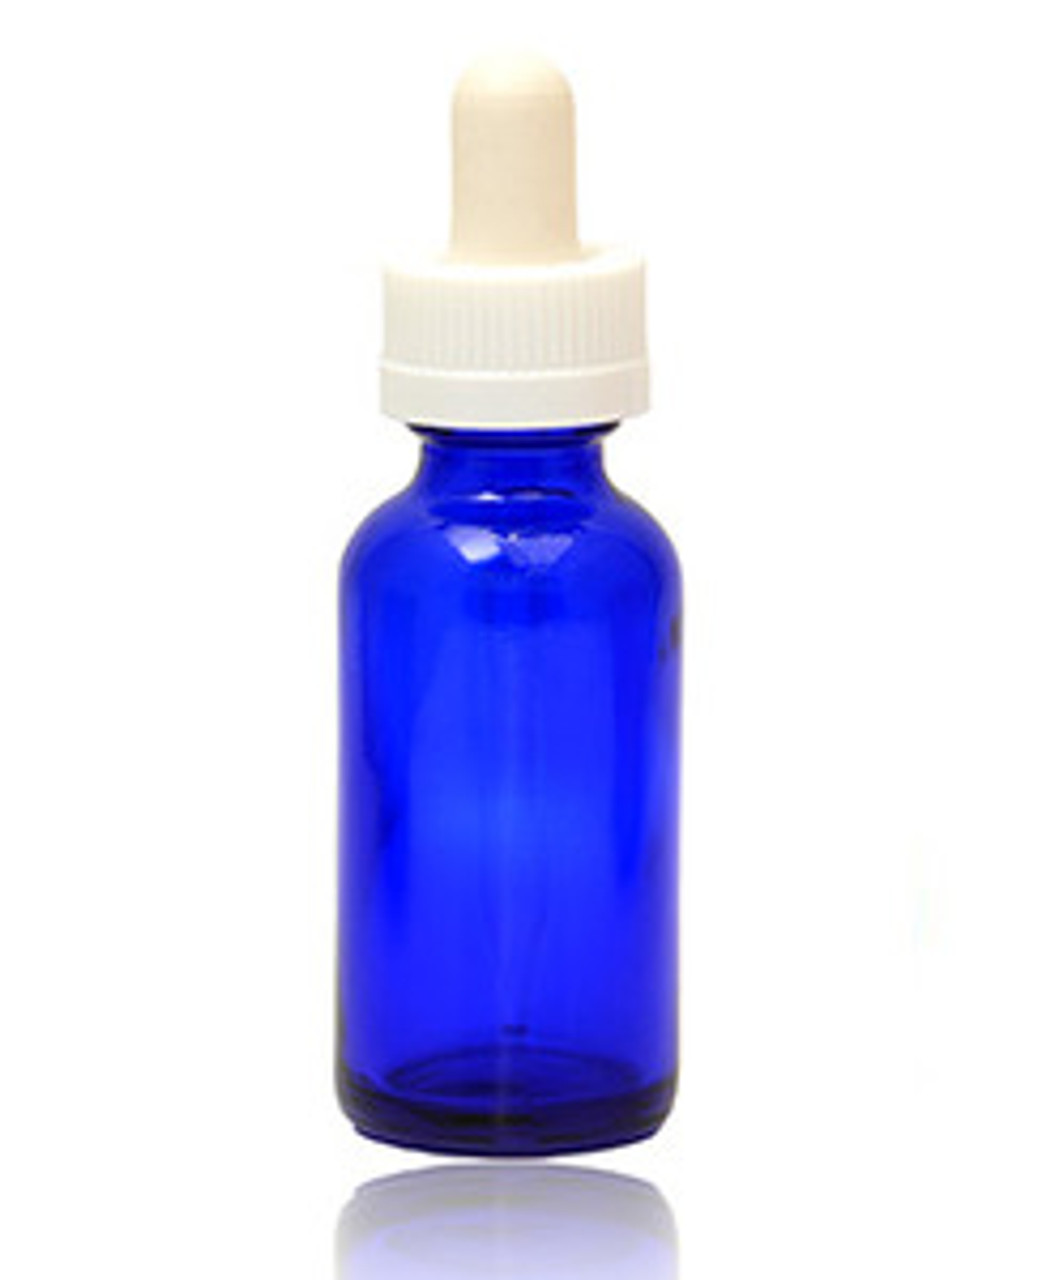 30 ml,1 oz Blue Boston Round with Child Resistant Dropper